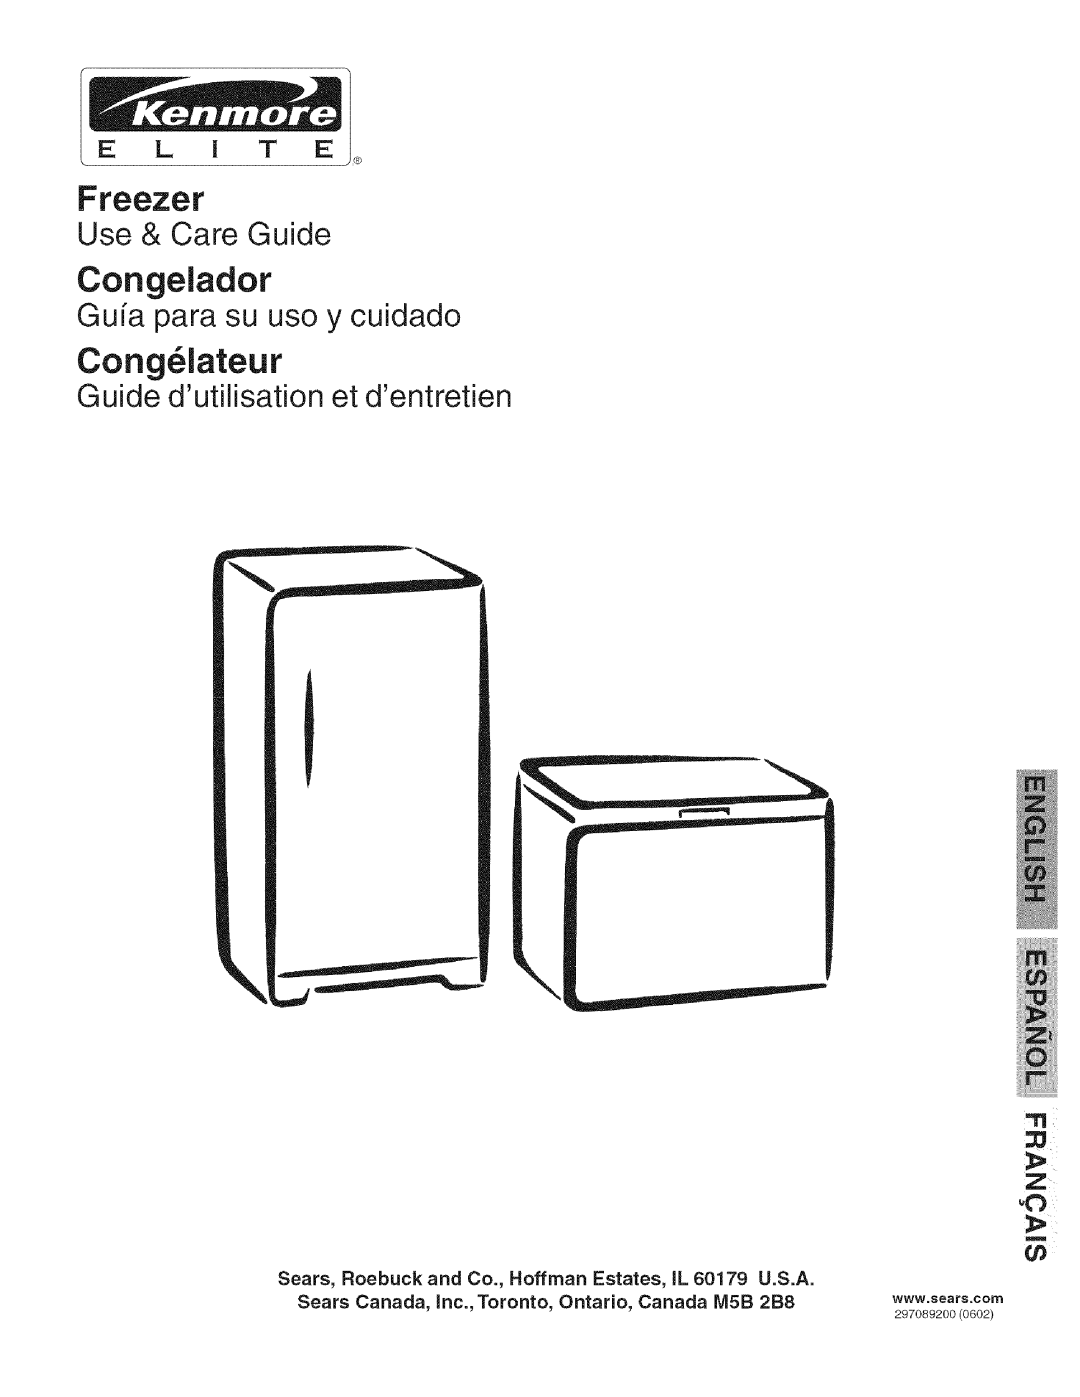 Kenmore 25316582102 manual E L ! T E, Freezer, Congelador, Cong lateur, Use & Care Guide, Gufa para su uso y cuidado 